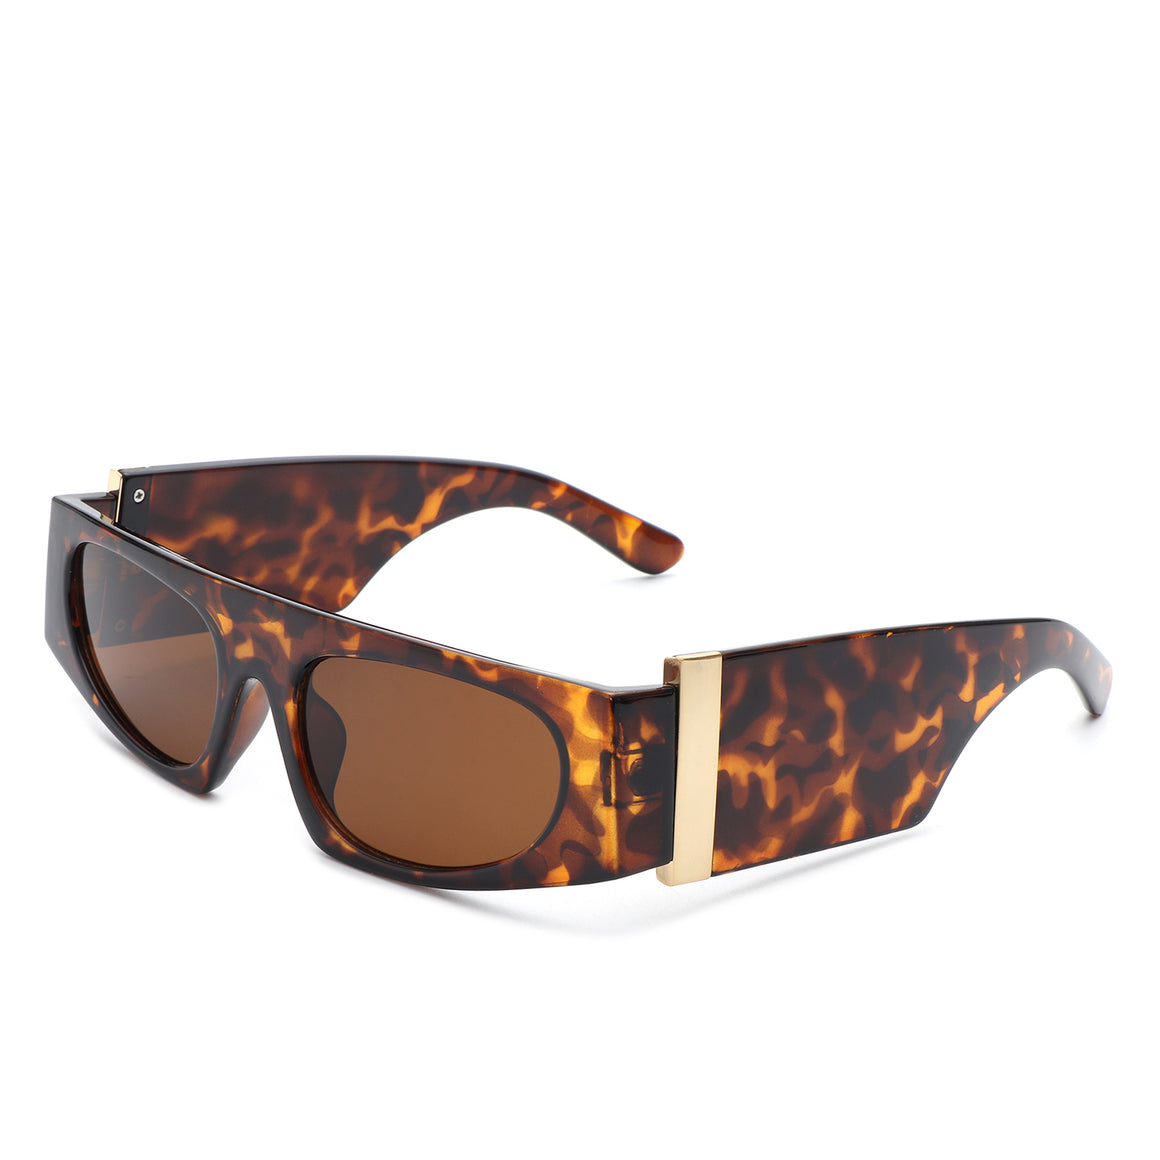 Starisle - Rectangle Chic Oval Lens Chunky Slim Fashion Sunglasses